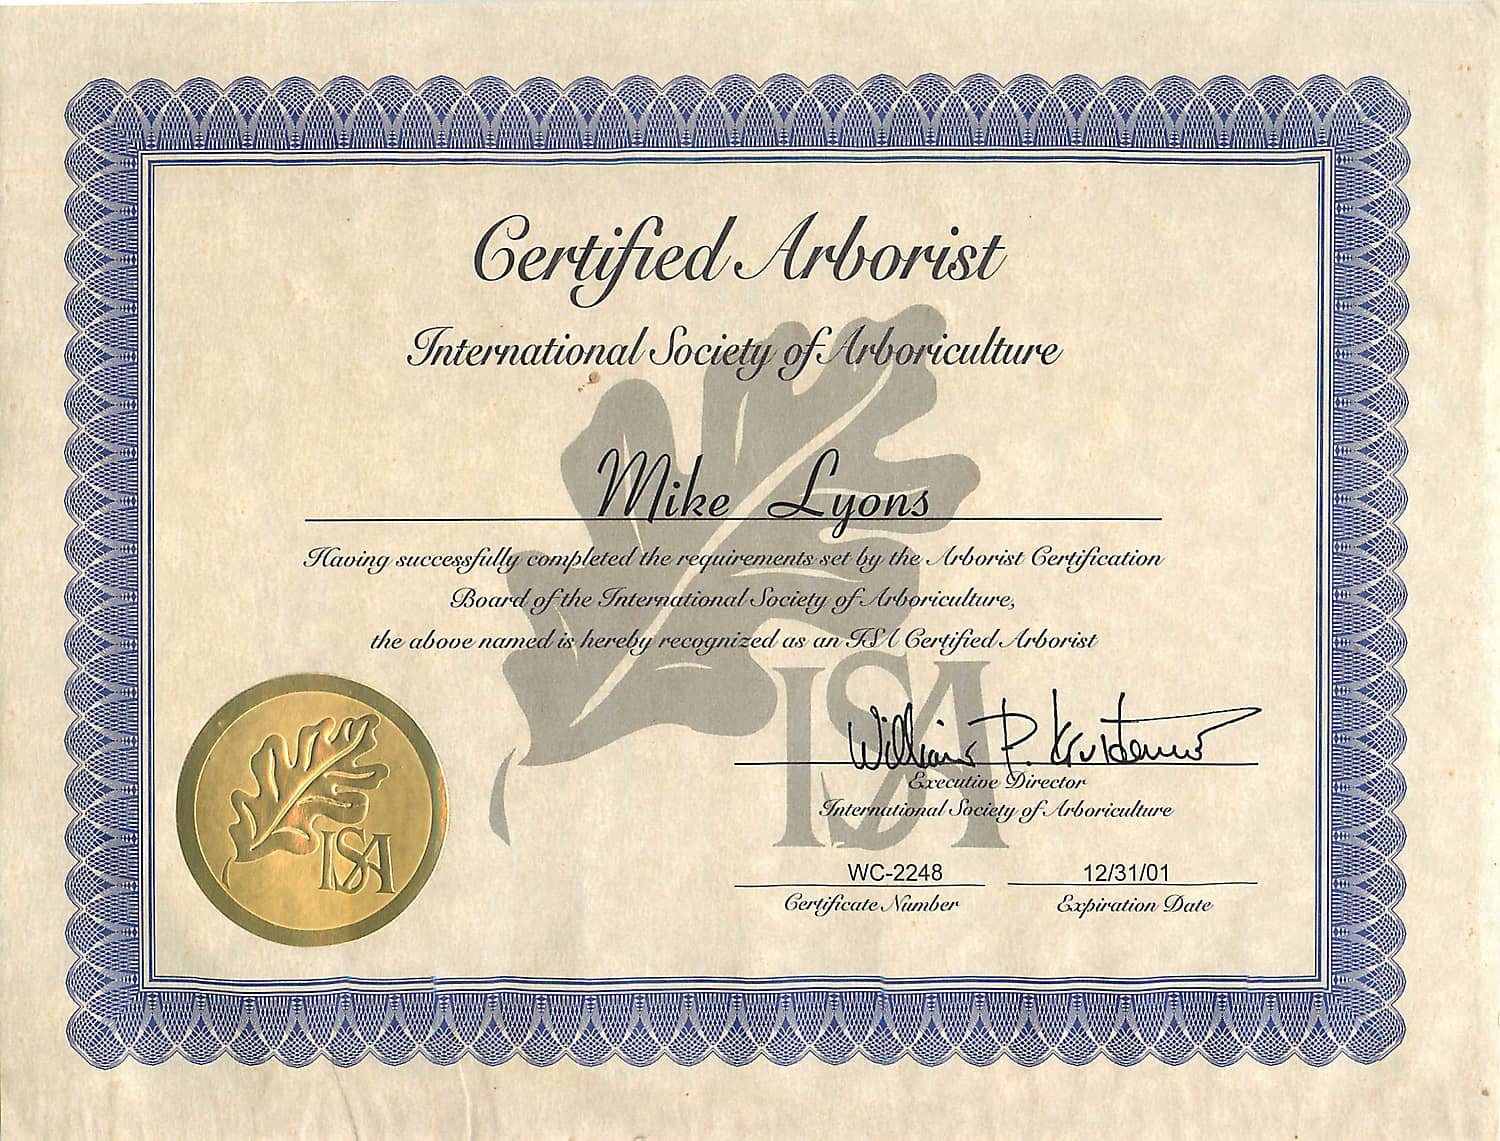 Certified Arborist in Northern CA- Mike Lyons - Certificate